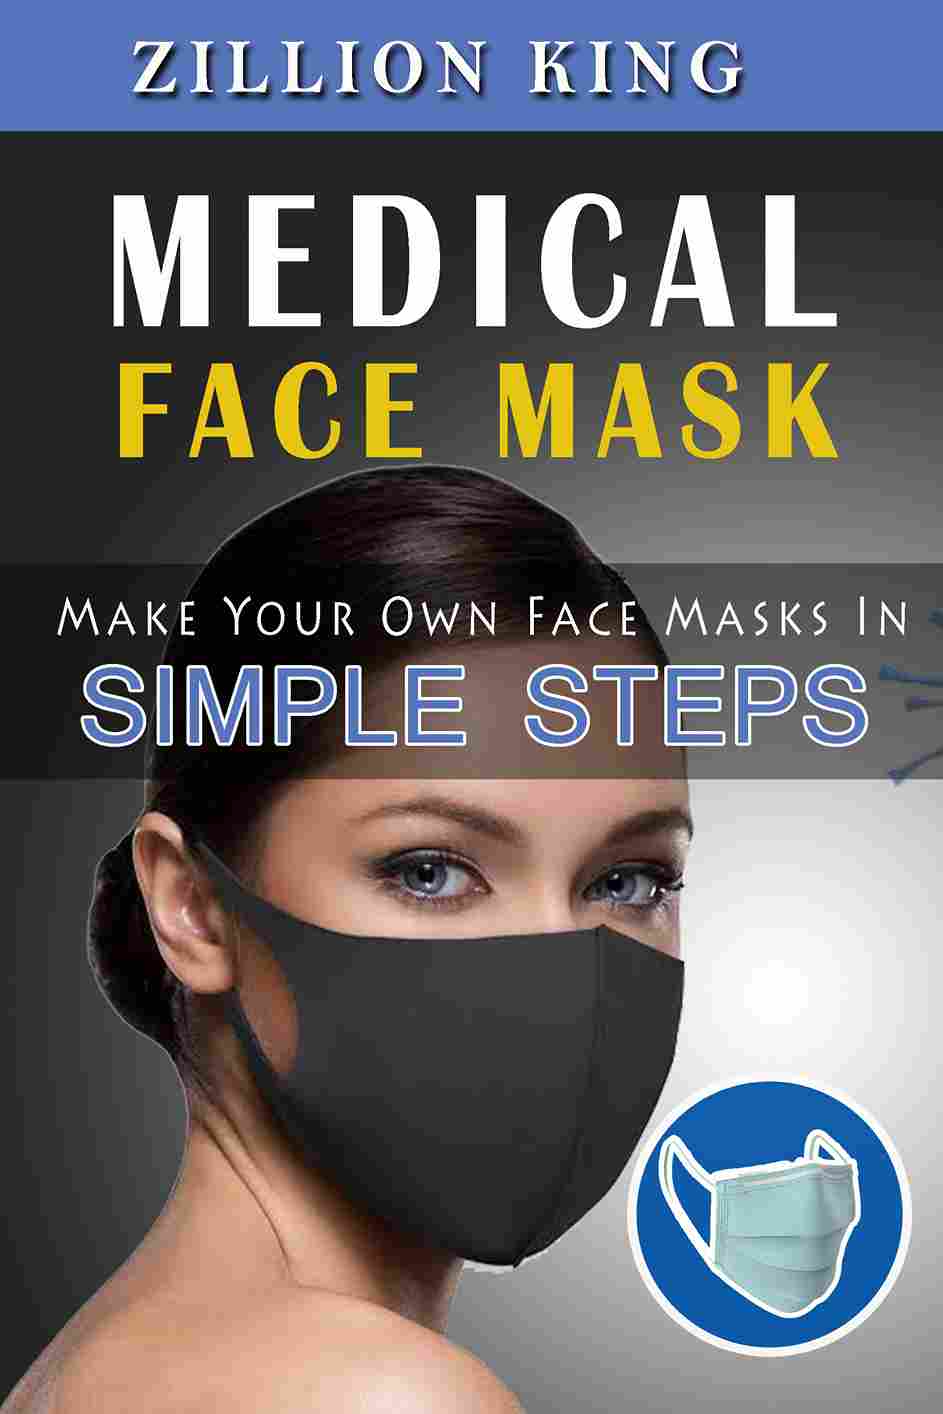 Medical Face Mask: Book Cover Design